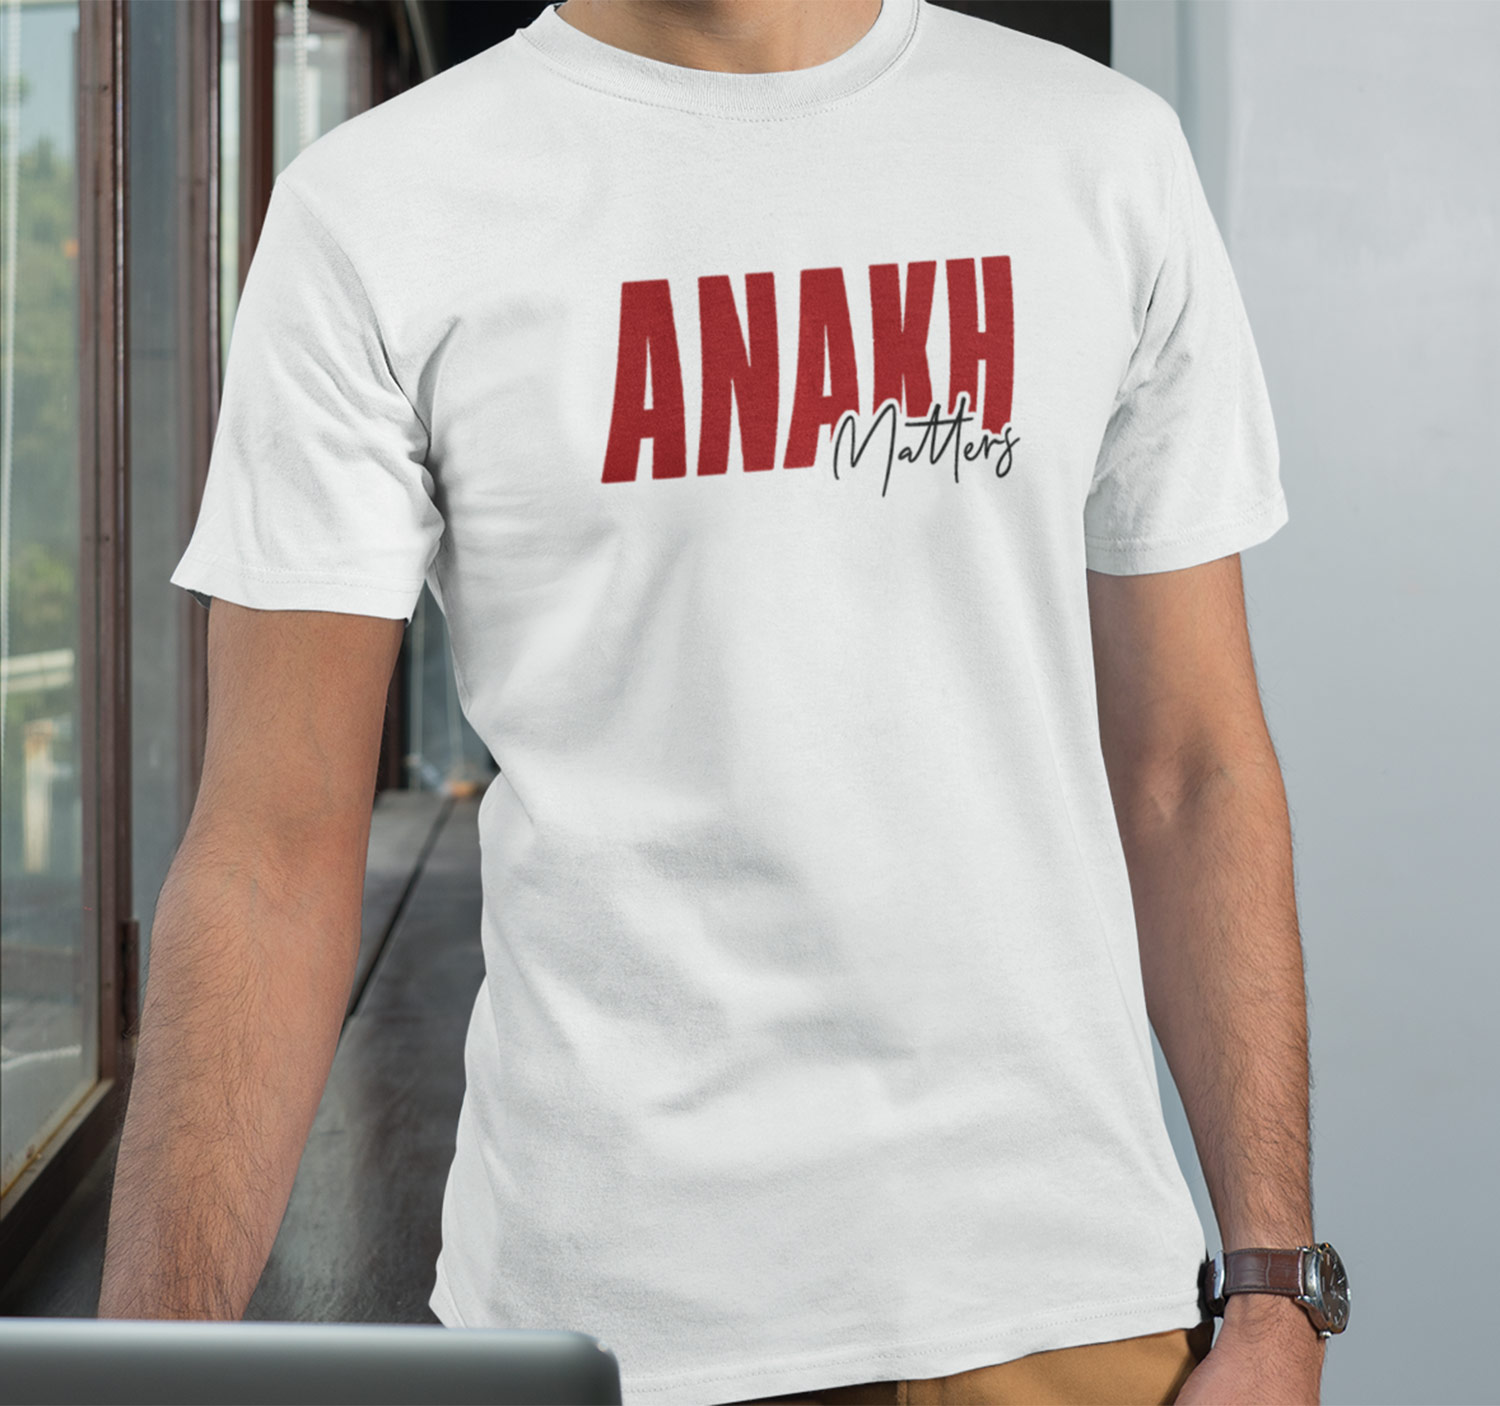 Buy Anakh Matters Slogan Printed Punjabi T Shirts For Men India